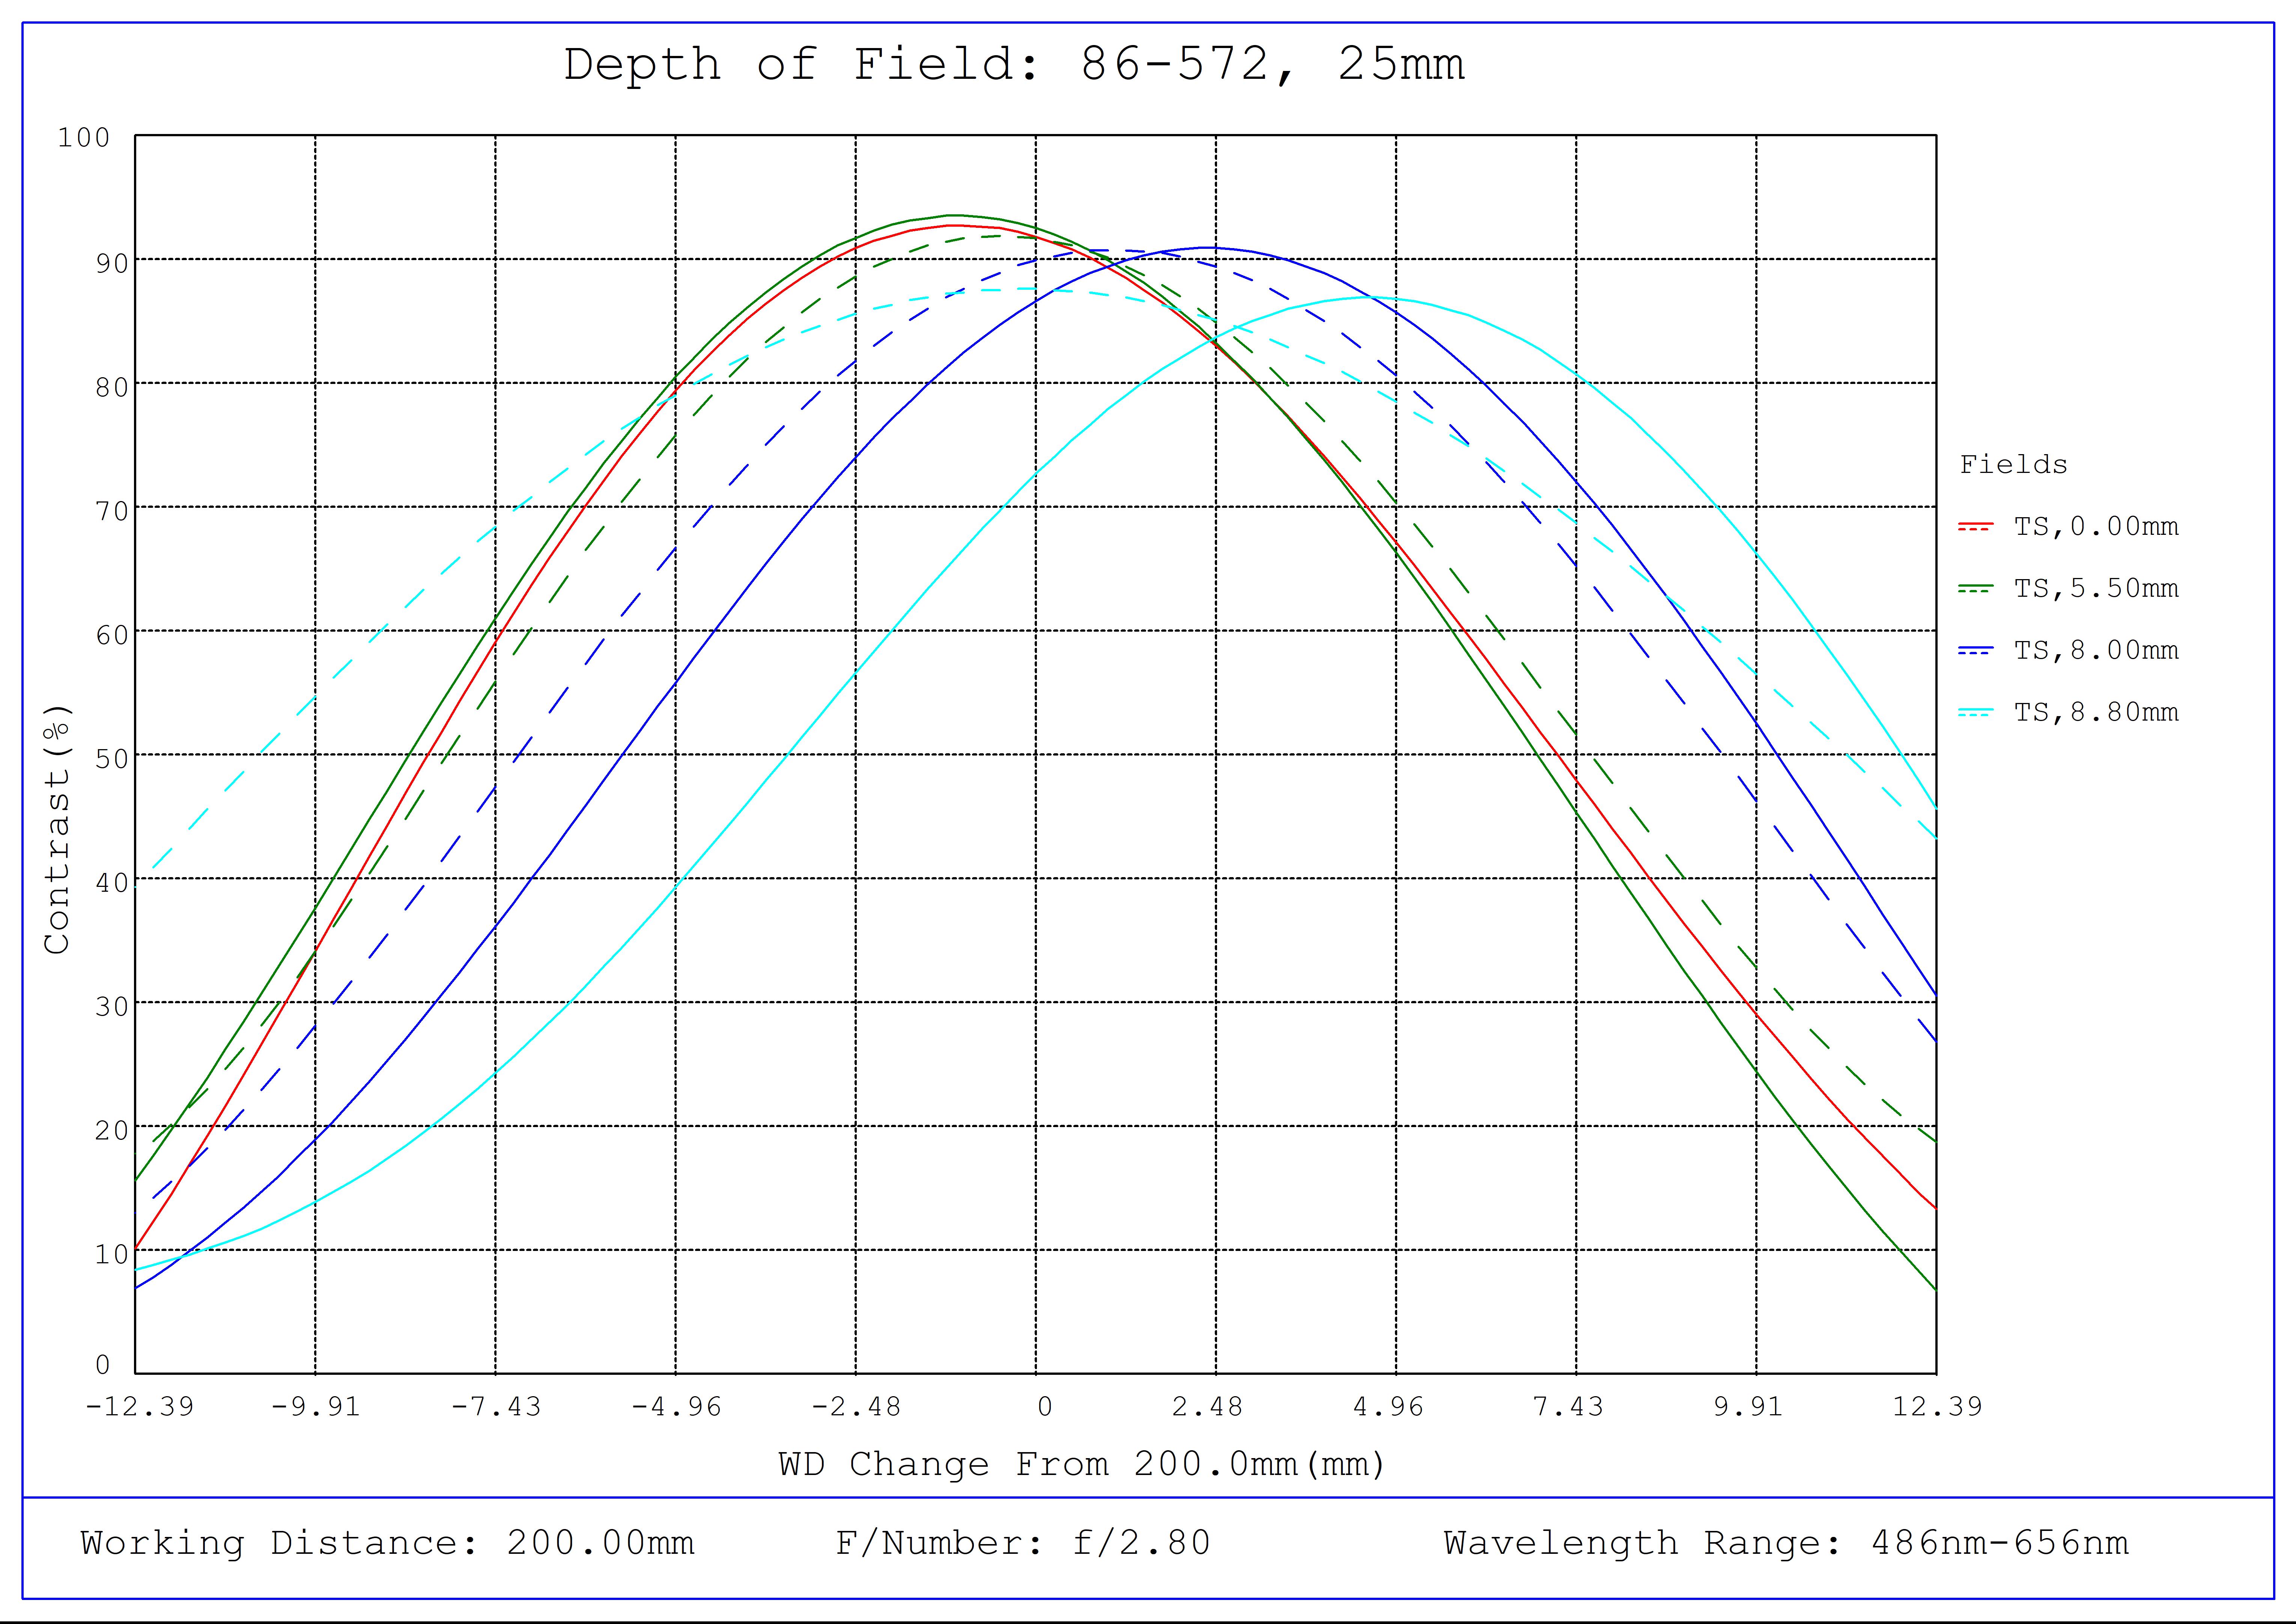 #86-572, 25mm Focal Length, HP Series Fixed Focal Length Lens, Depth of Field Plot, 200mm Working Distance, f2.8